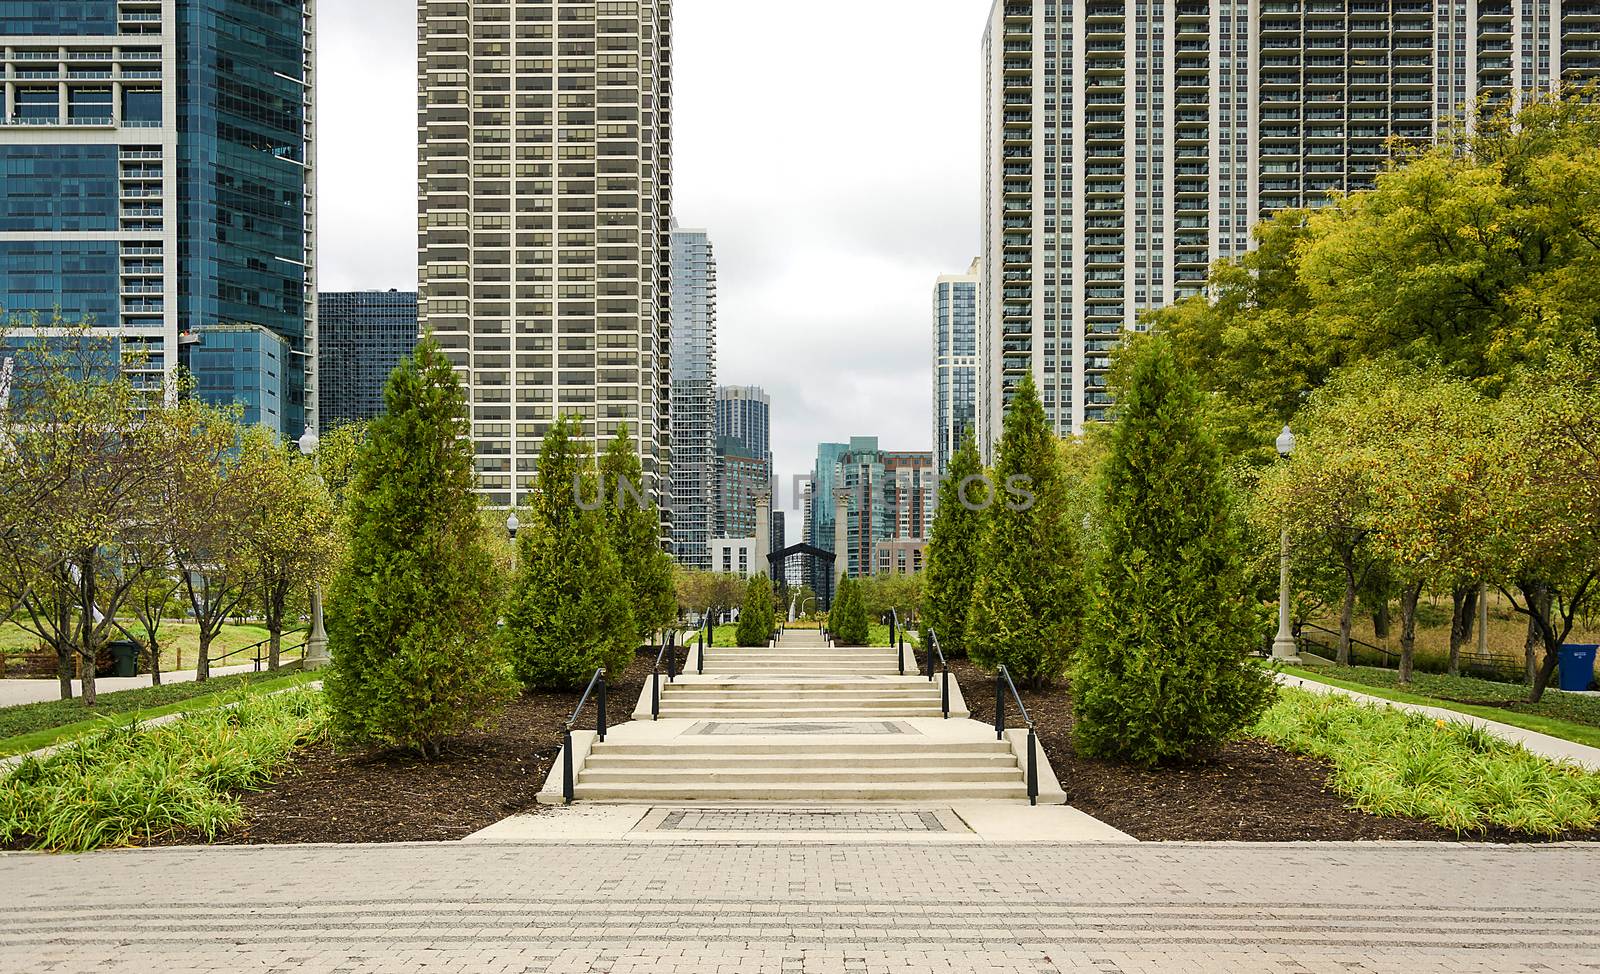 Millennium Park, Chicago by rarrarorro